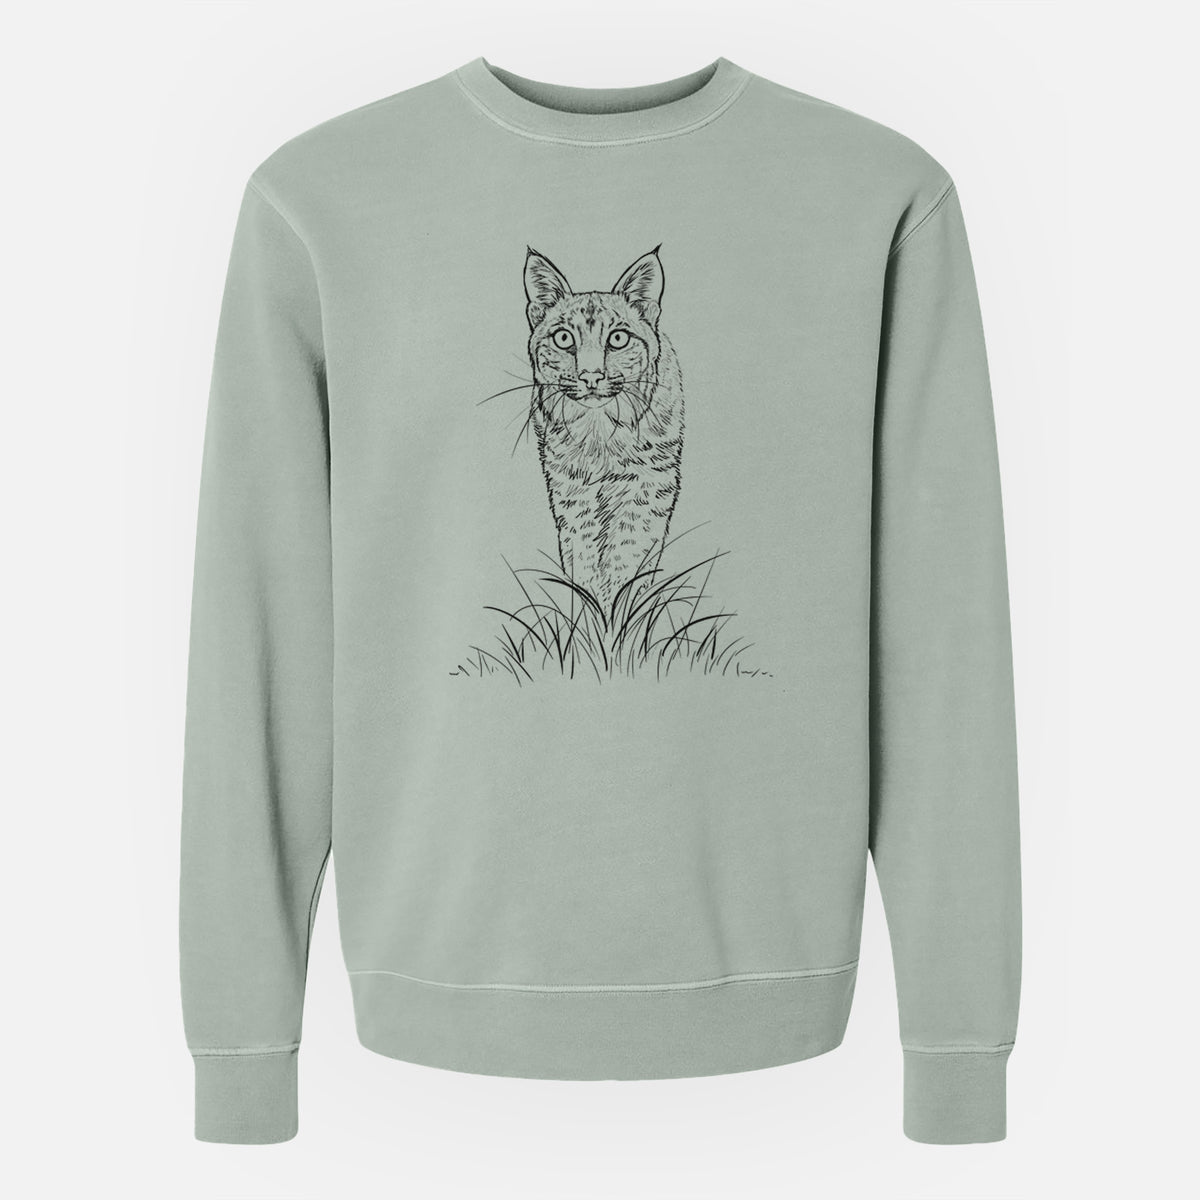 Bobcat - Lynx rufus - Unisex Pigment Dyed Crew Sweatshirt